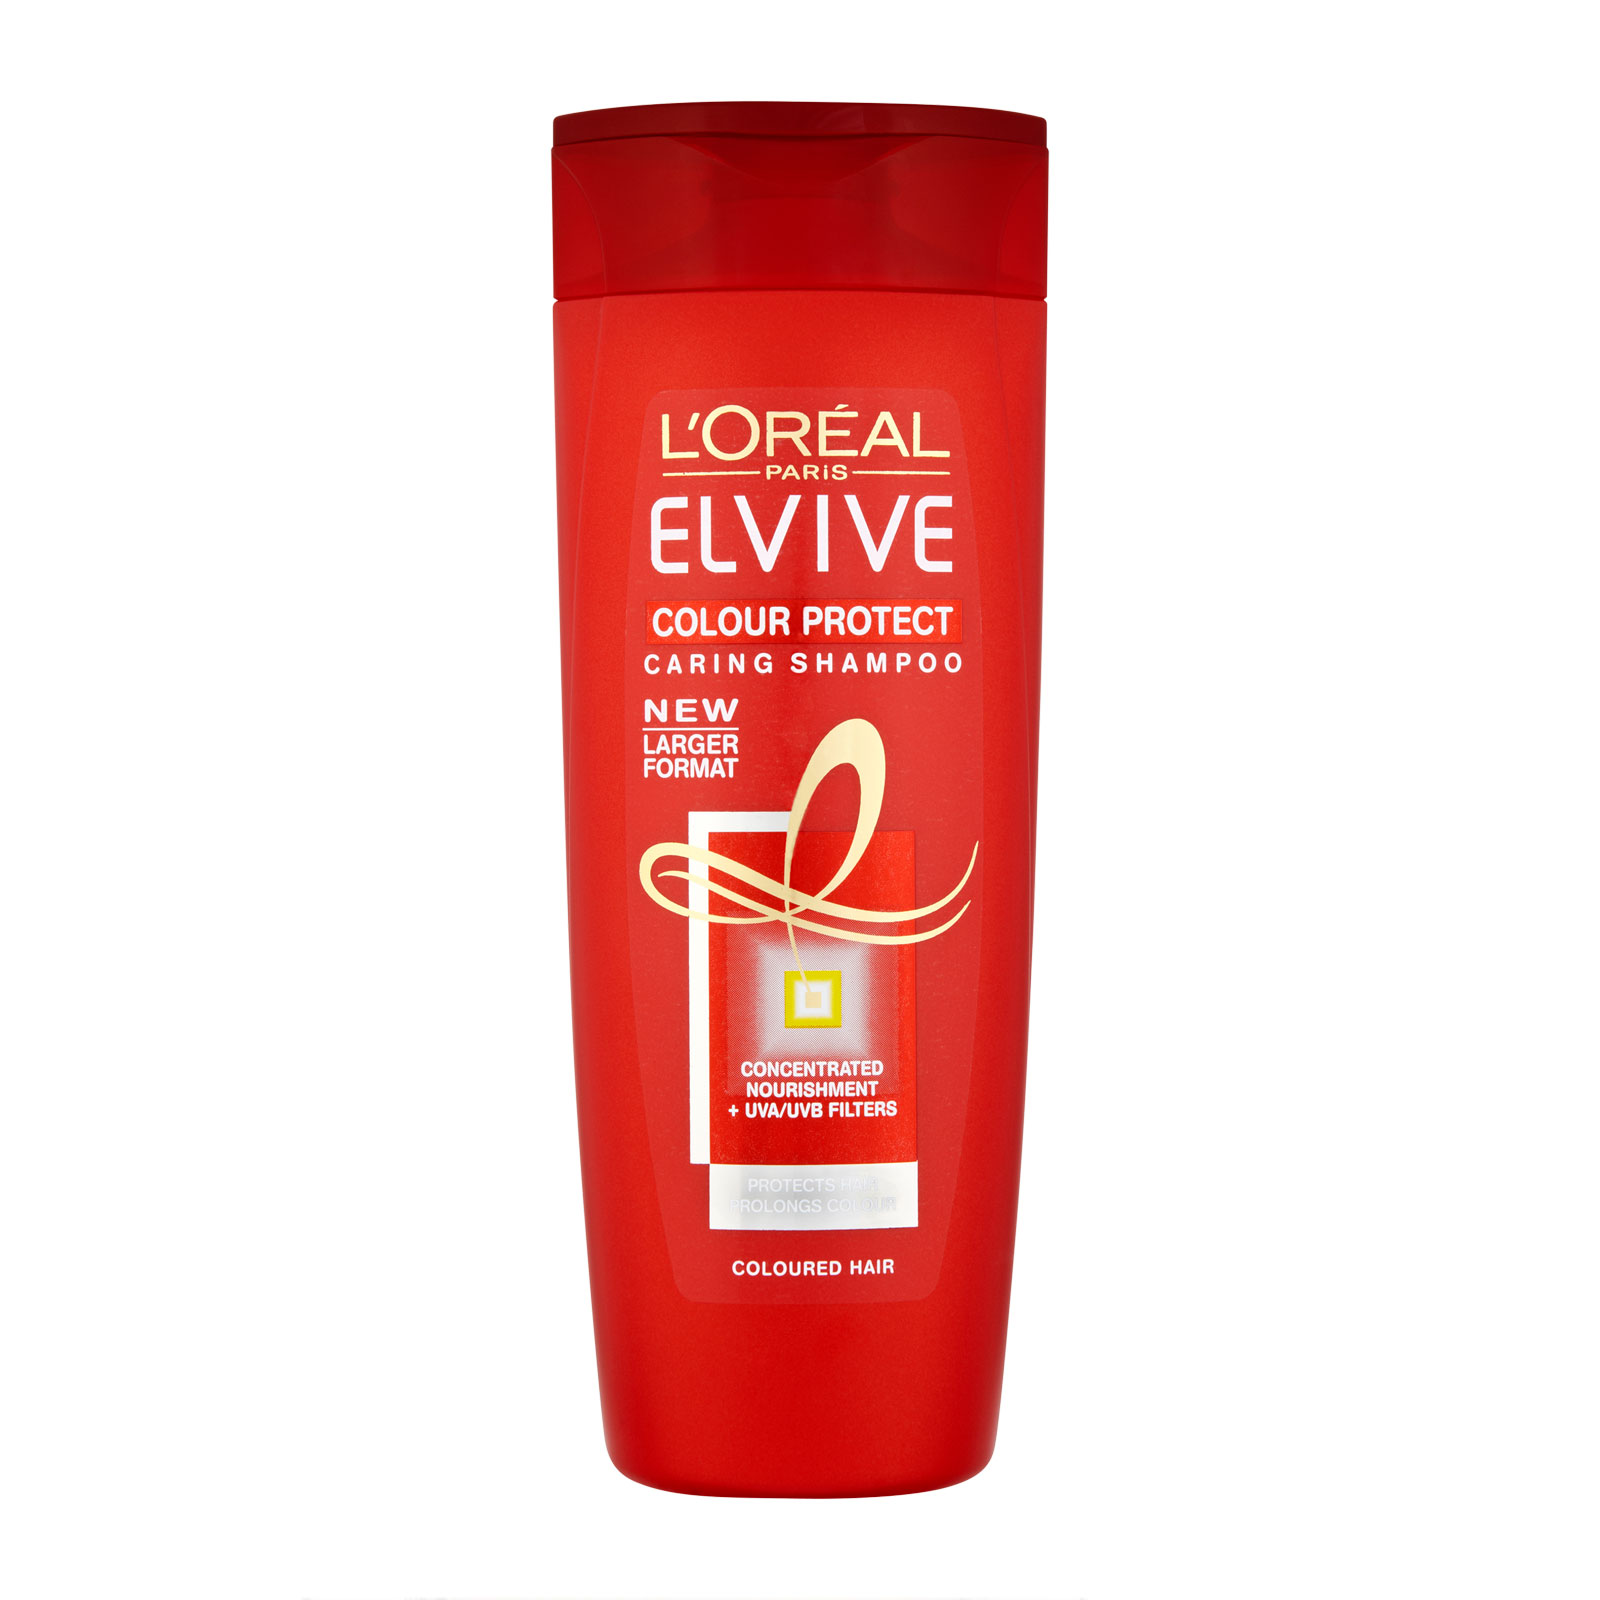 L'Oreal Paris Elvive Colour Protect Shampoo 500Ml